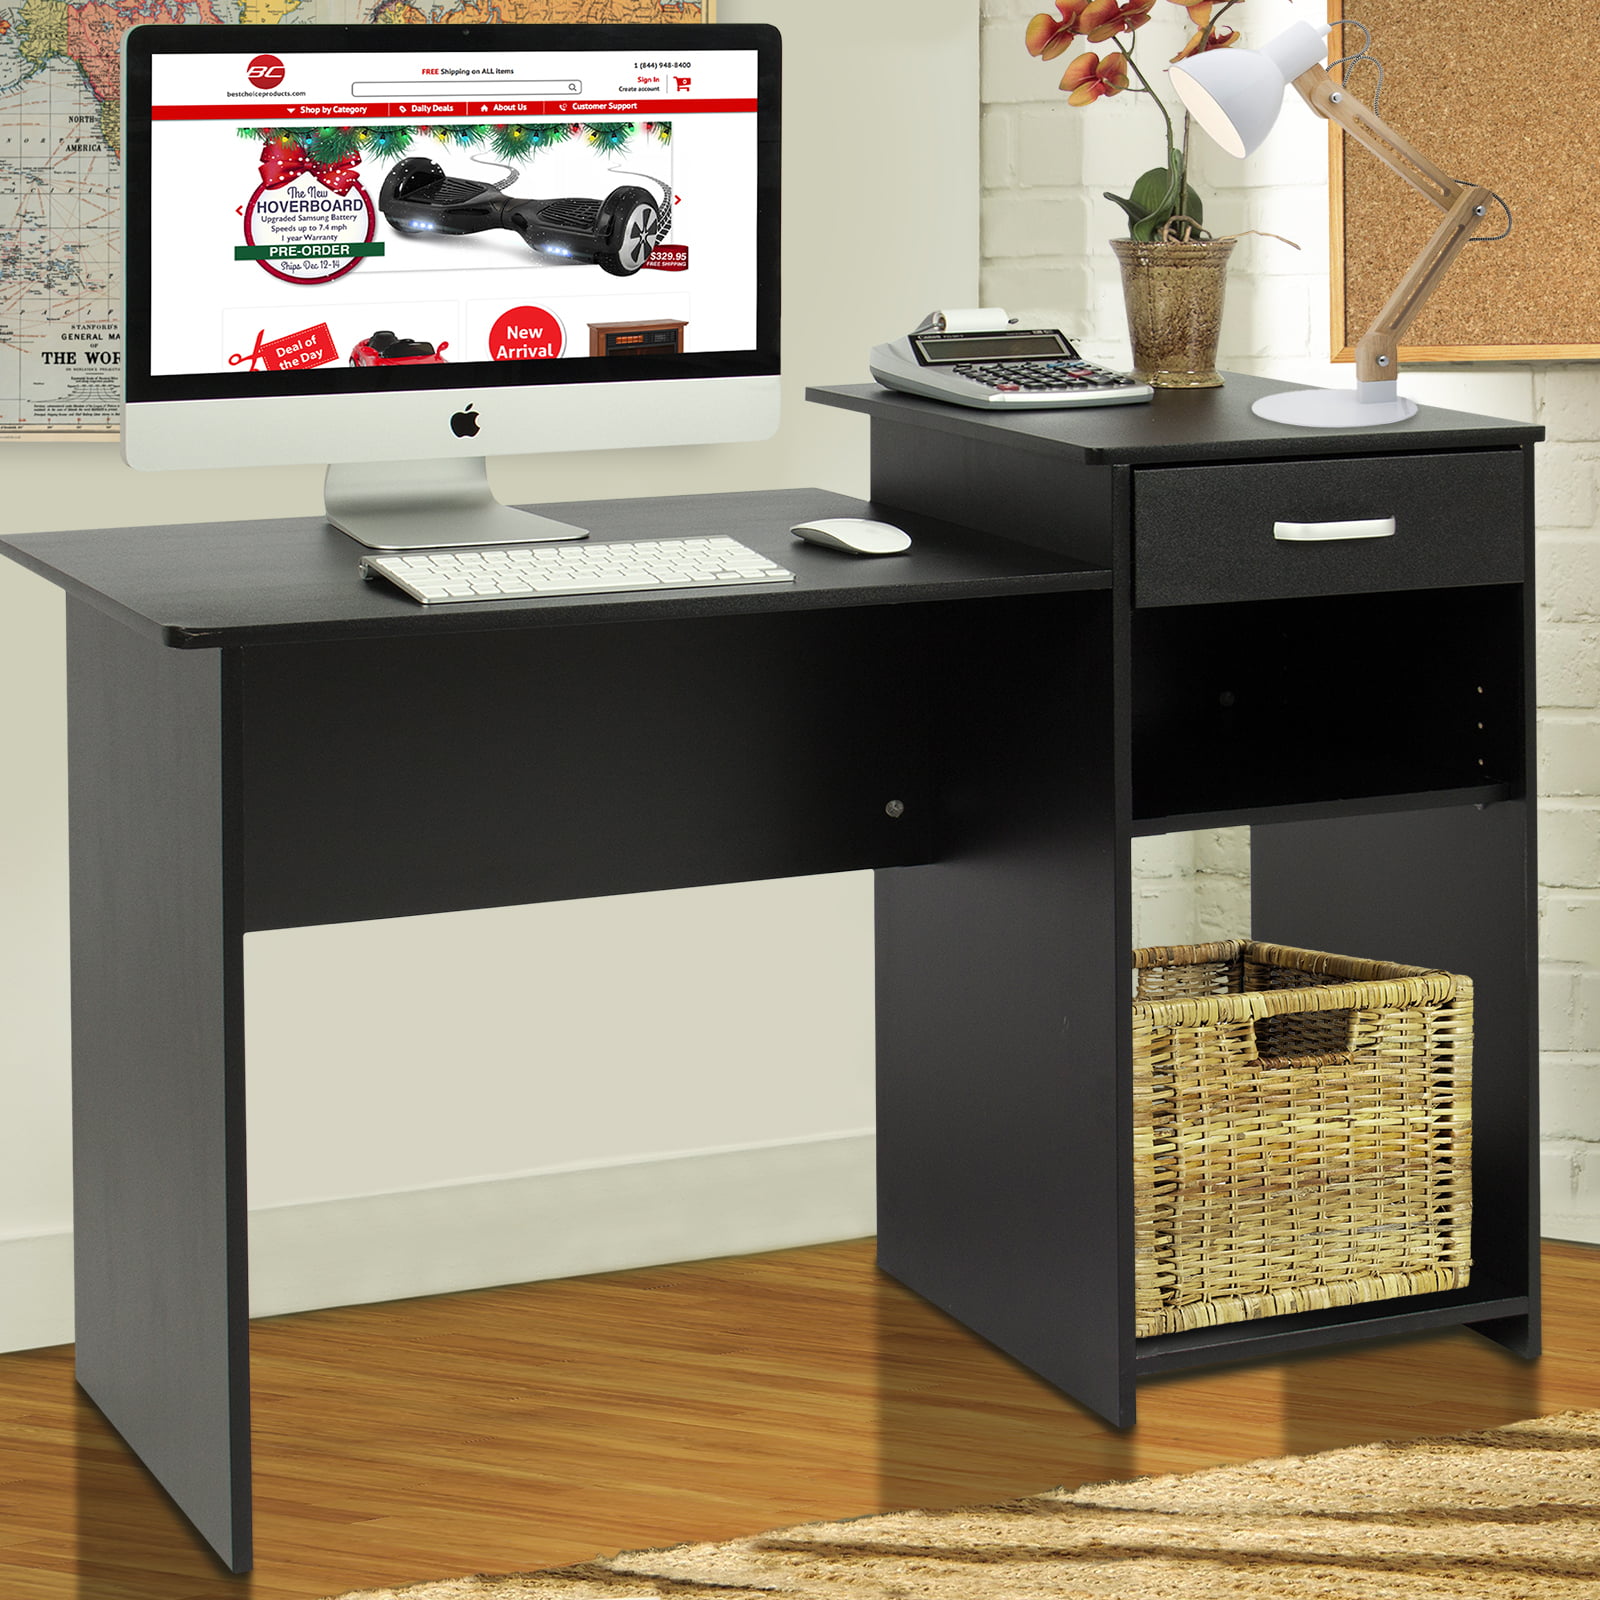 Computer Desk Table Workstation Home Office Student Dorm Laptop Study w/Shelf US